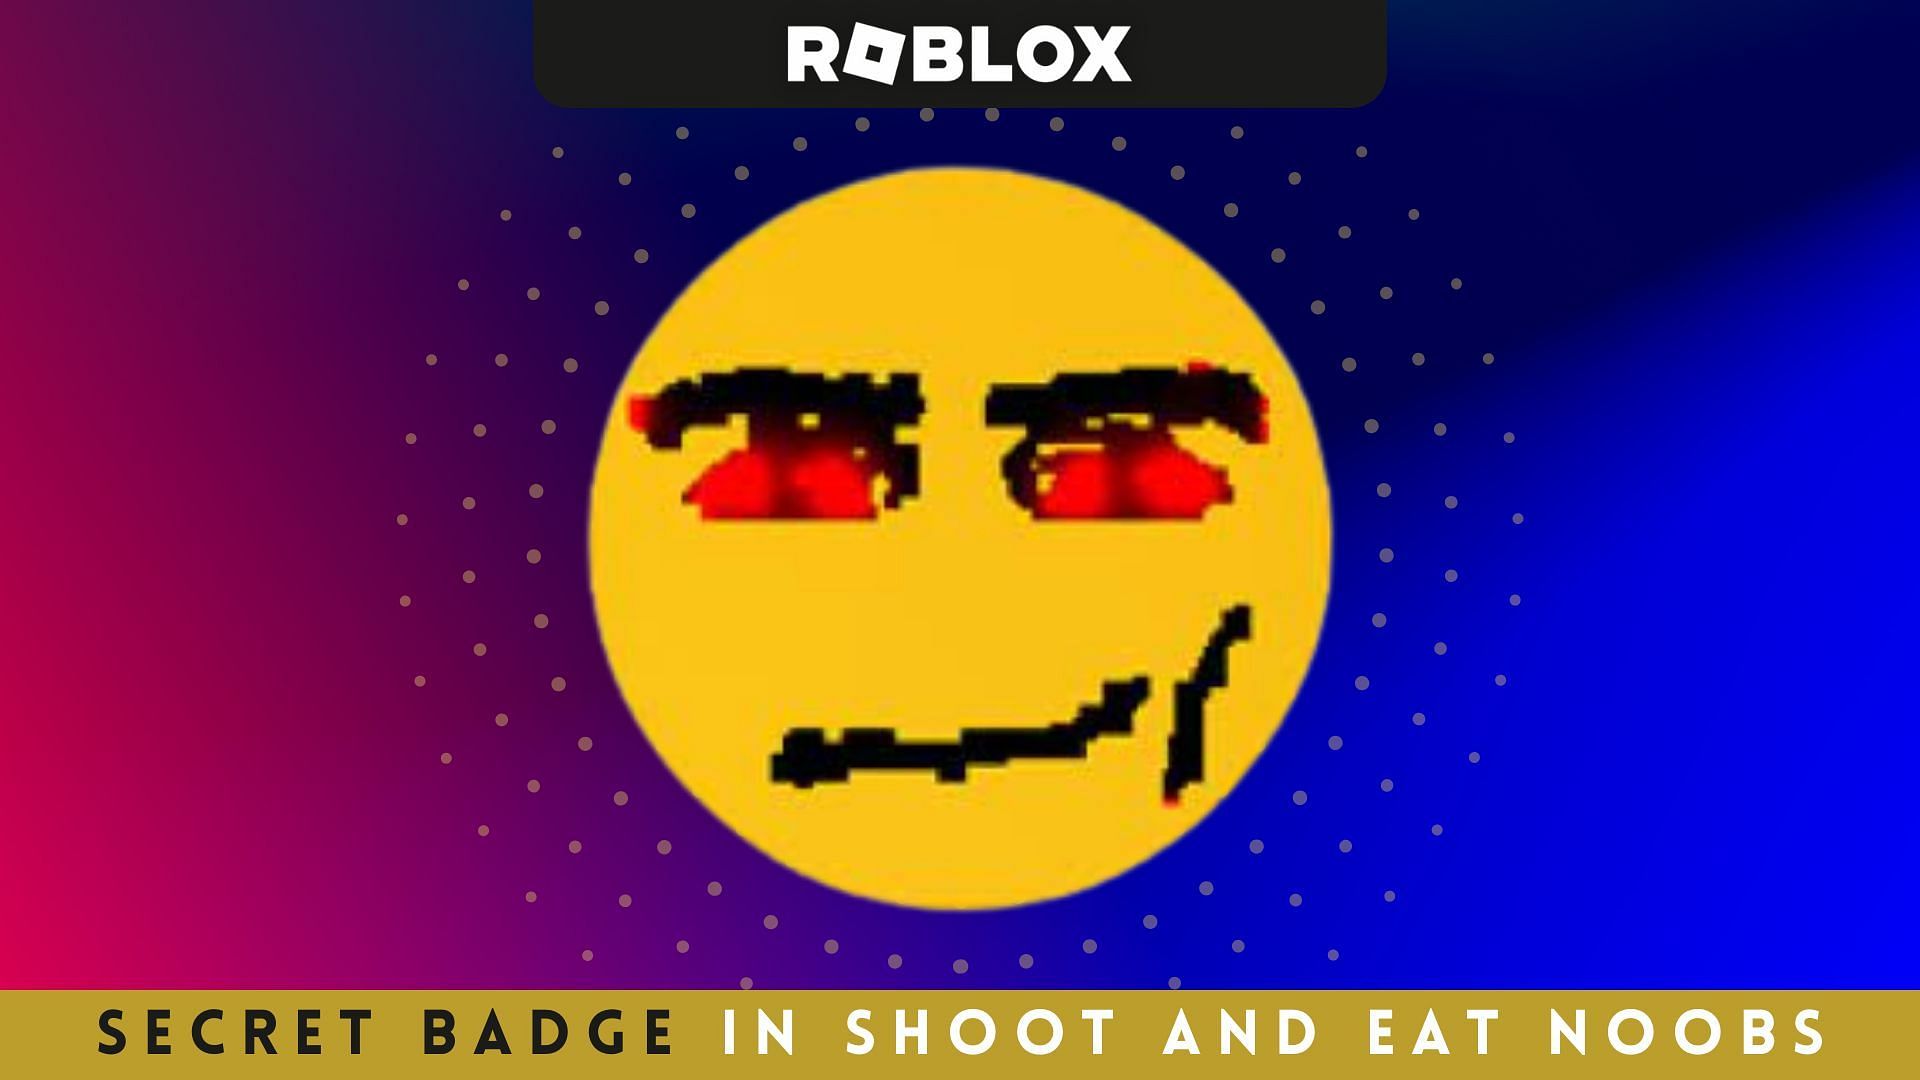 noob real face - Roblox